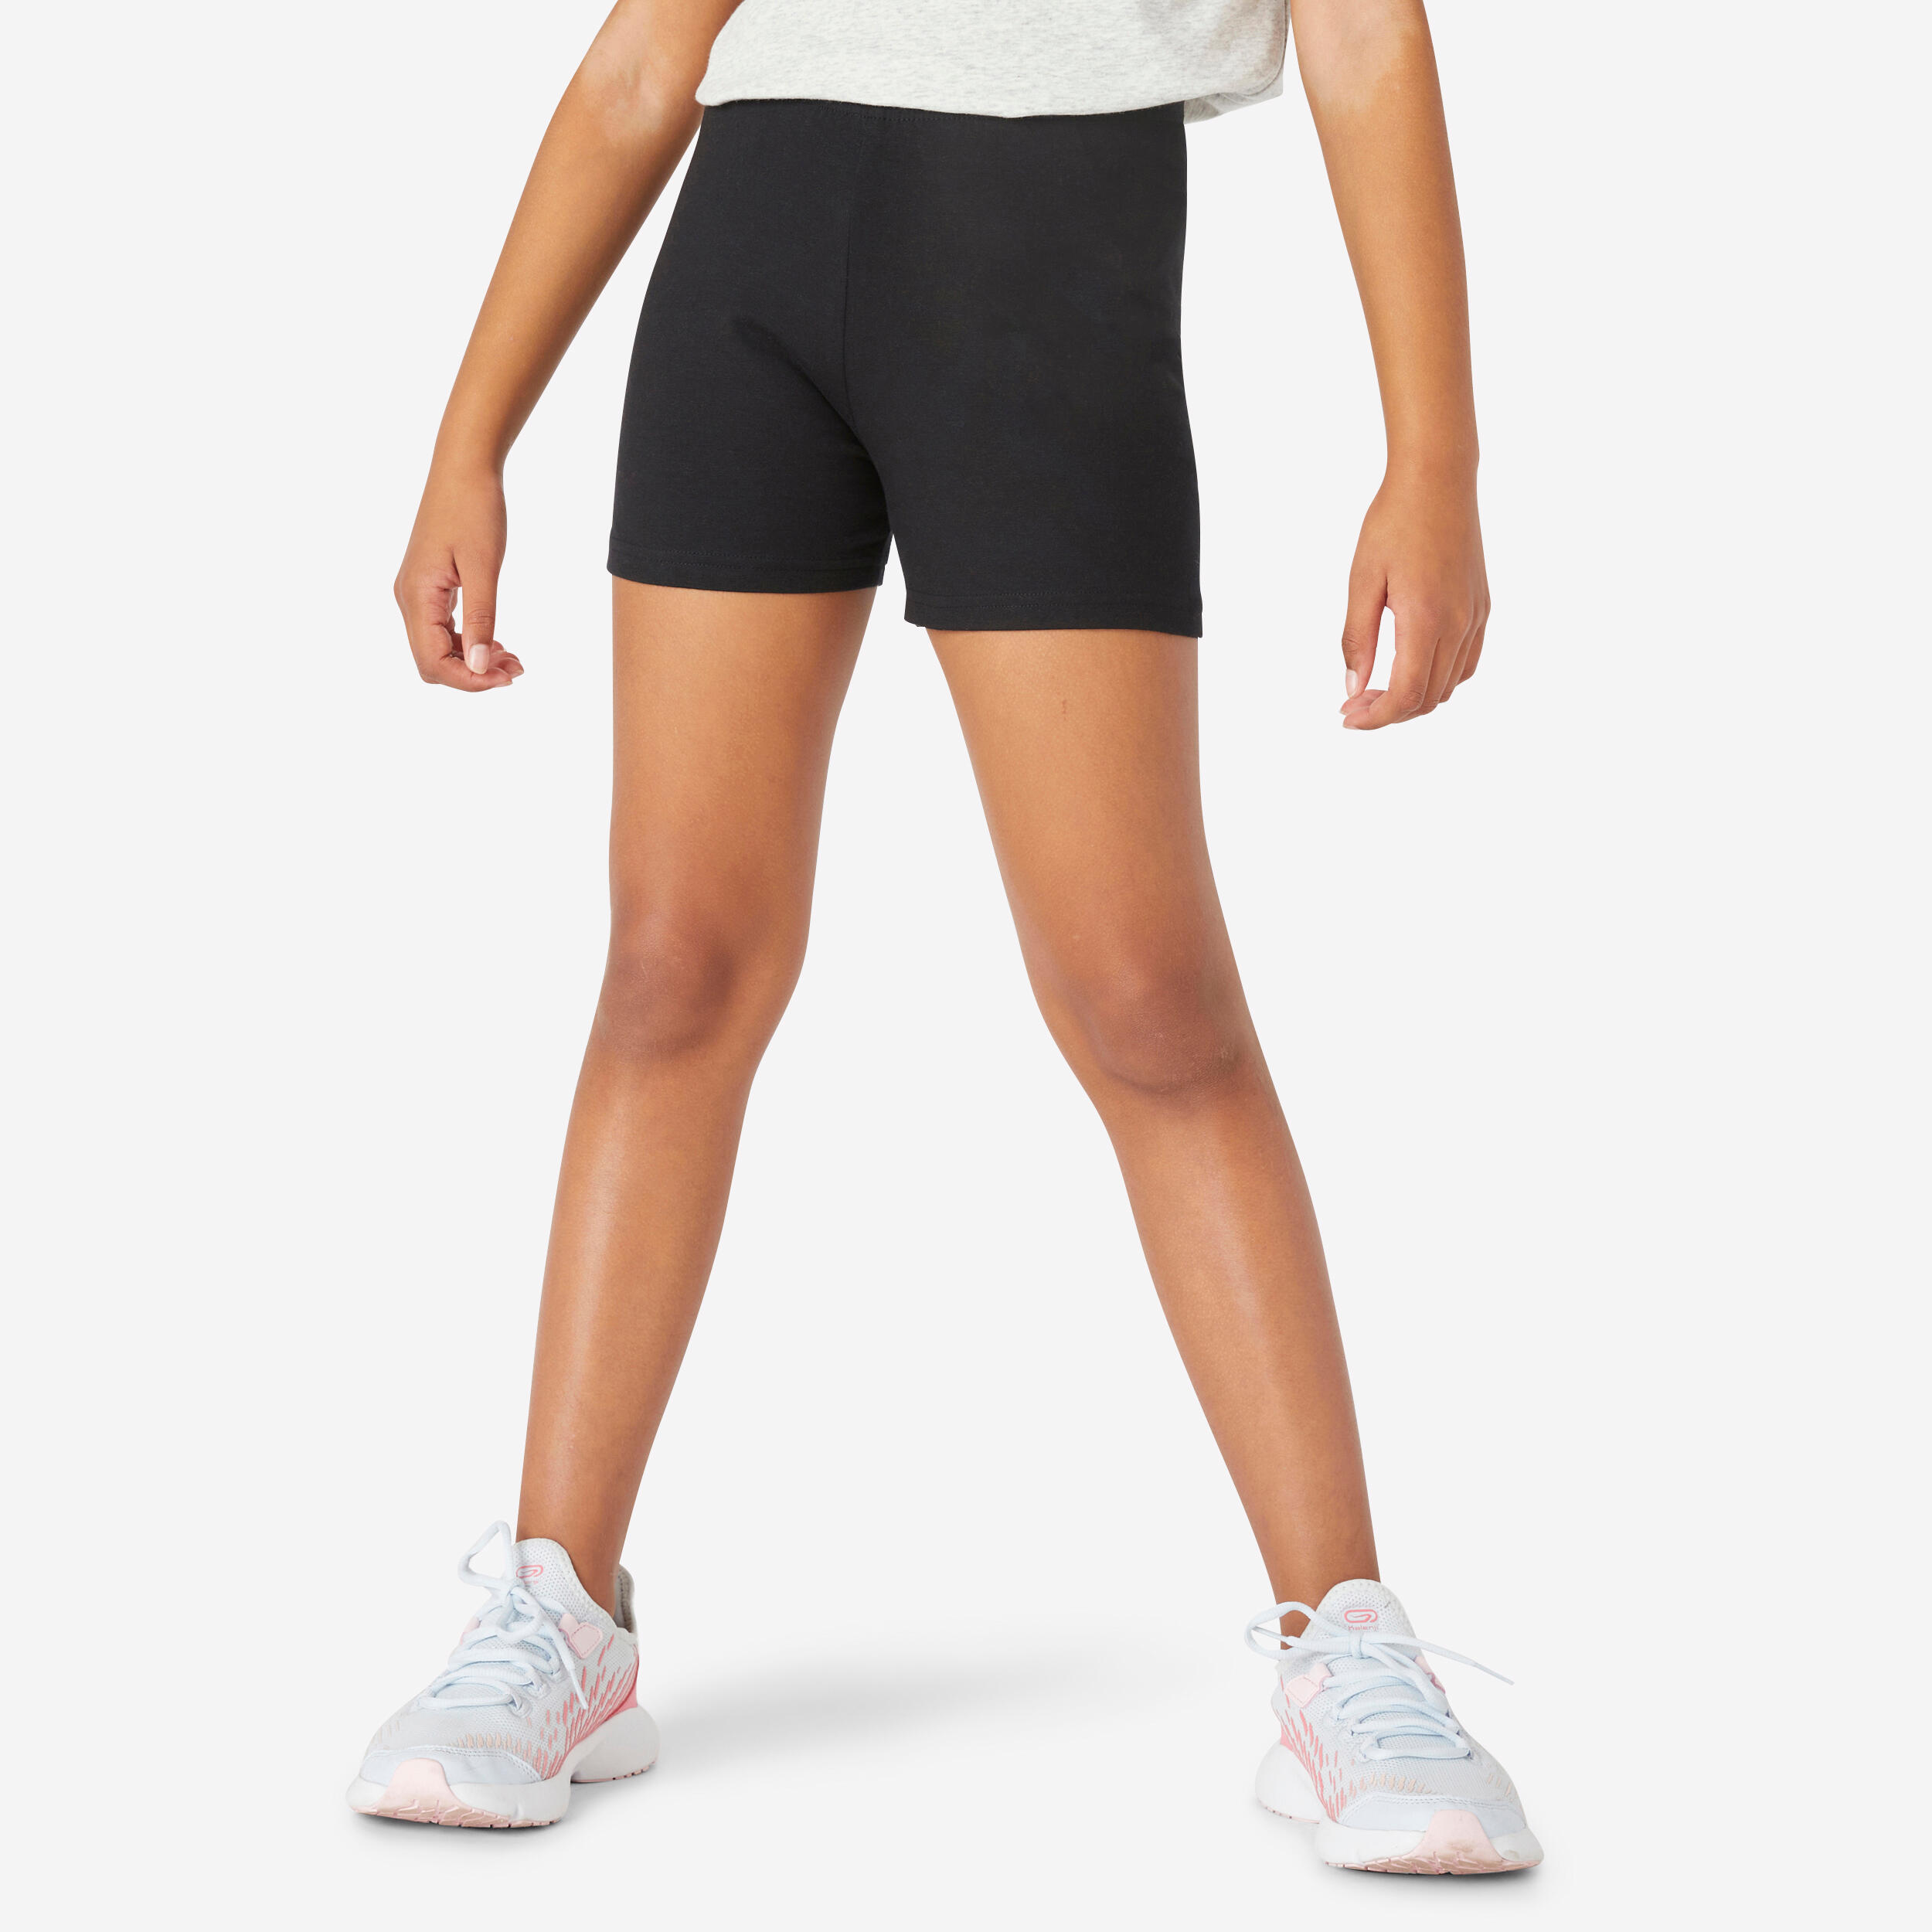 100% Nylon Athletic Shorts for Women